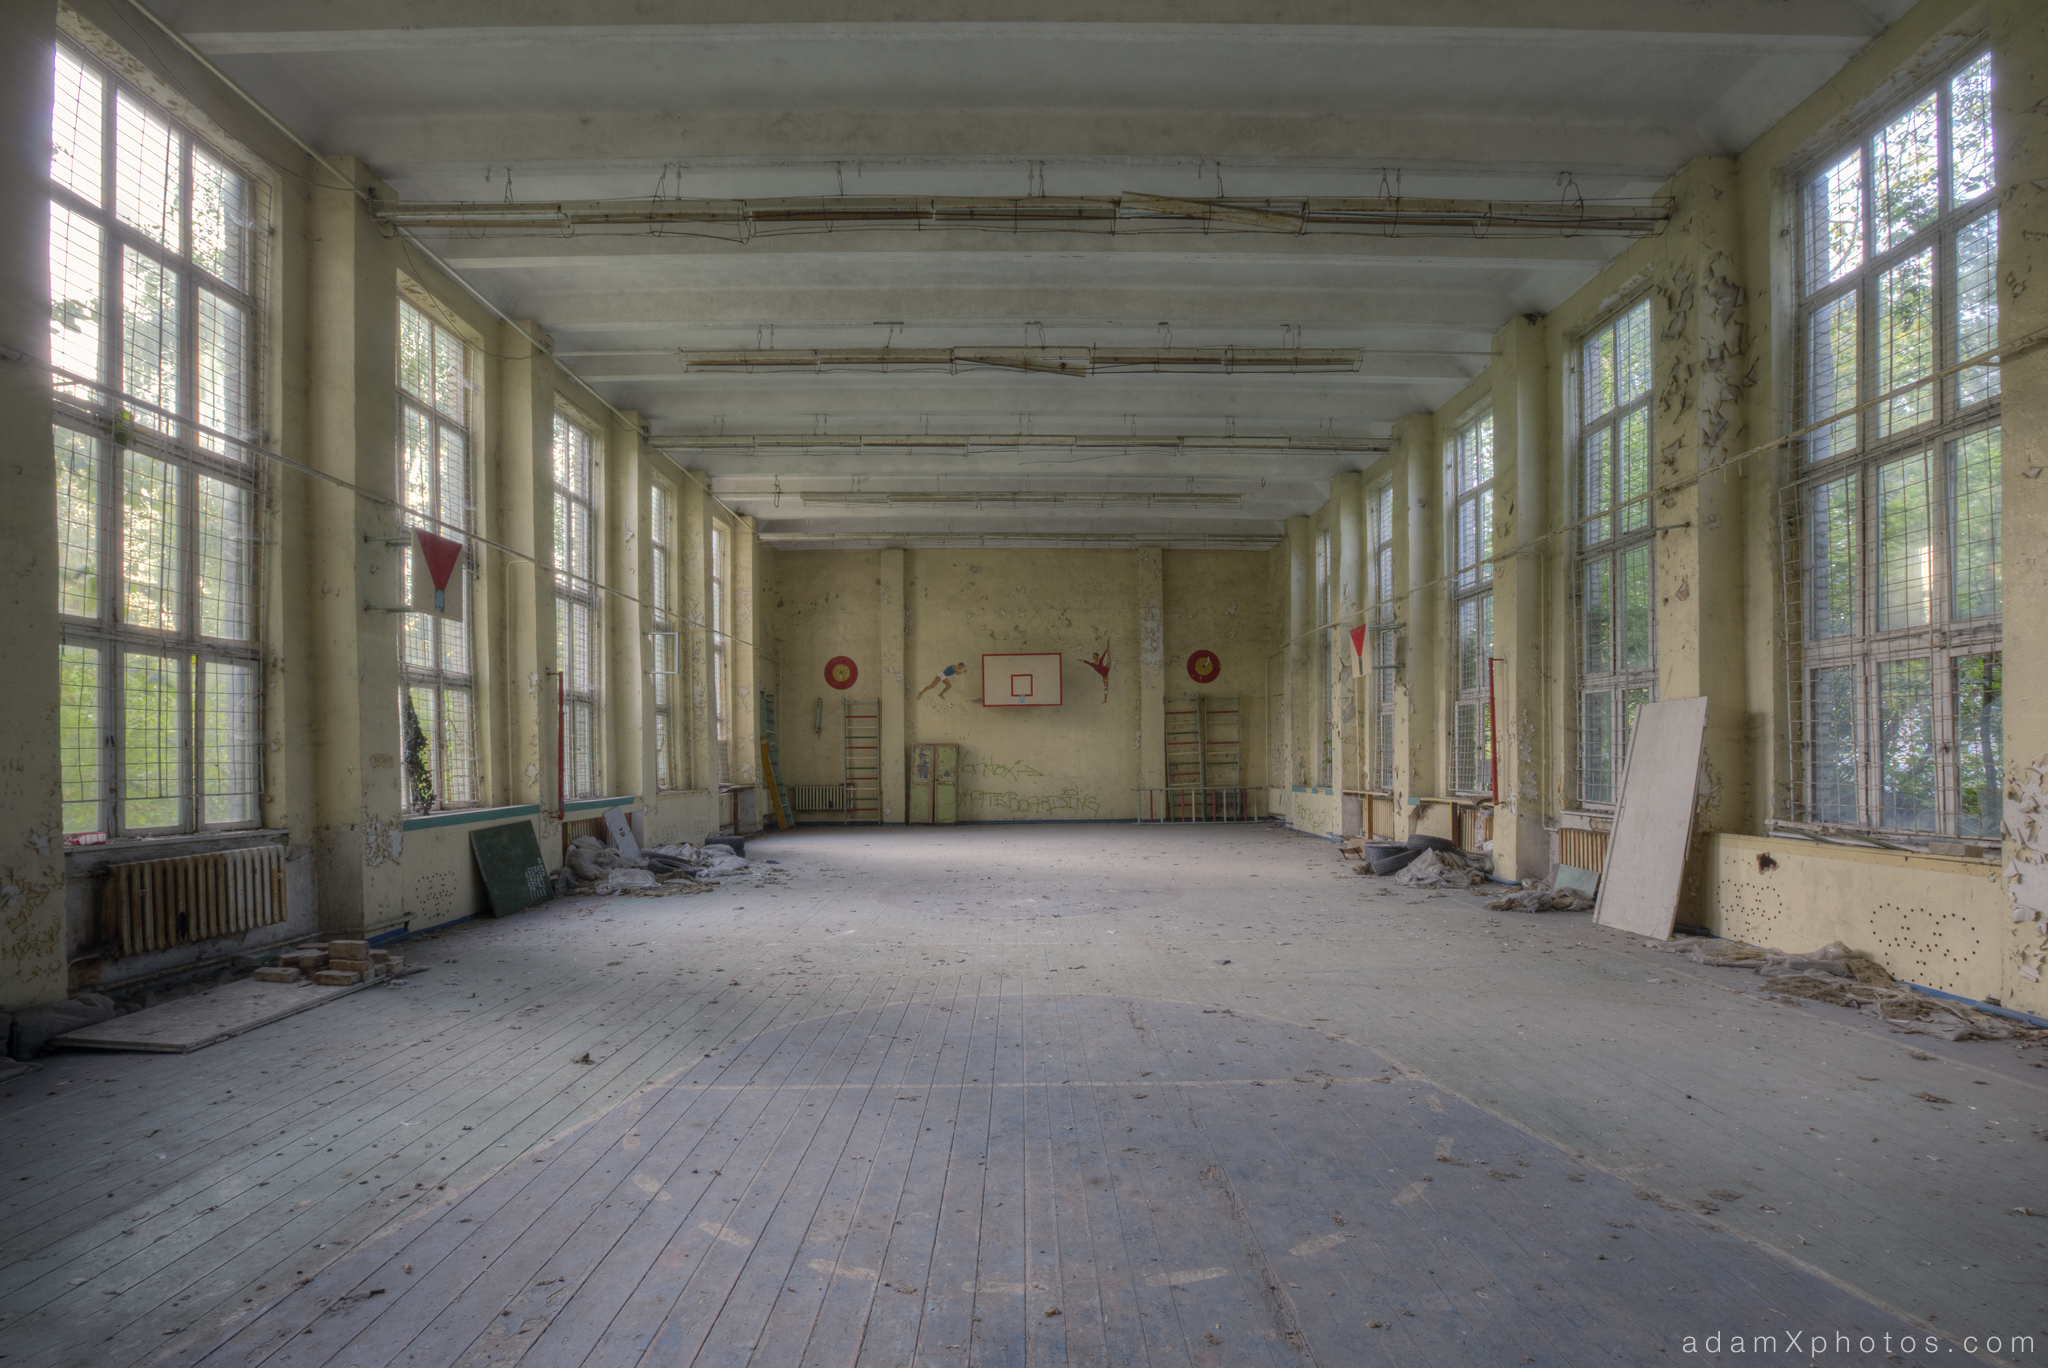 Adam X Urbex Urban Exploration Germany Juterbog School Soviet Russian Abandoned Lost Decay Gym Basketball court Gymnasium